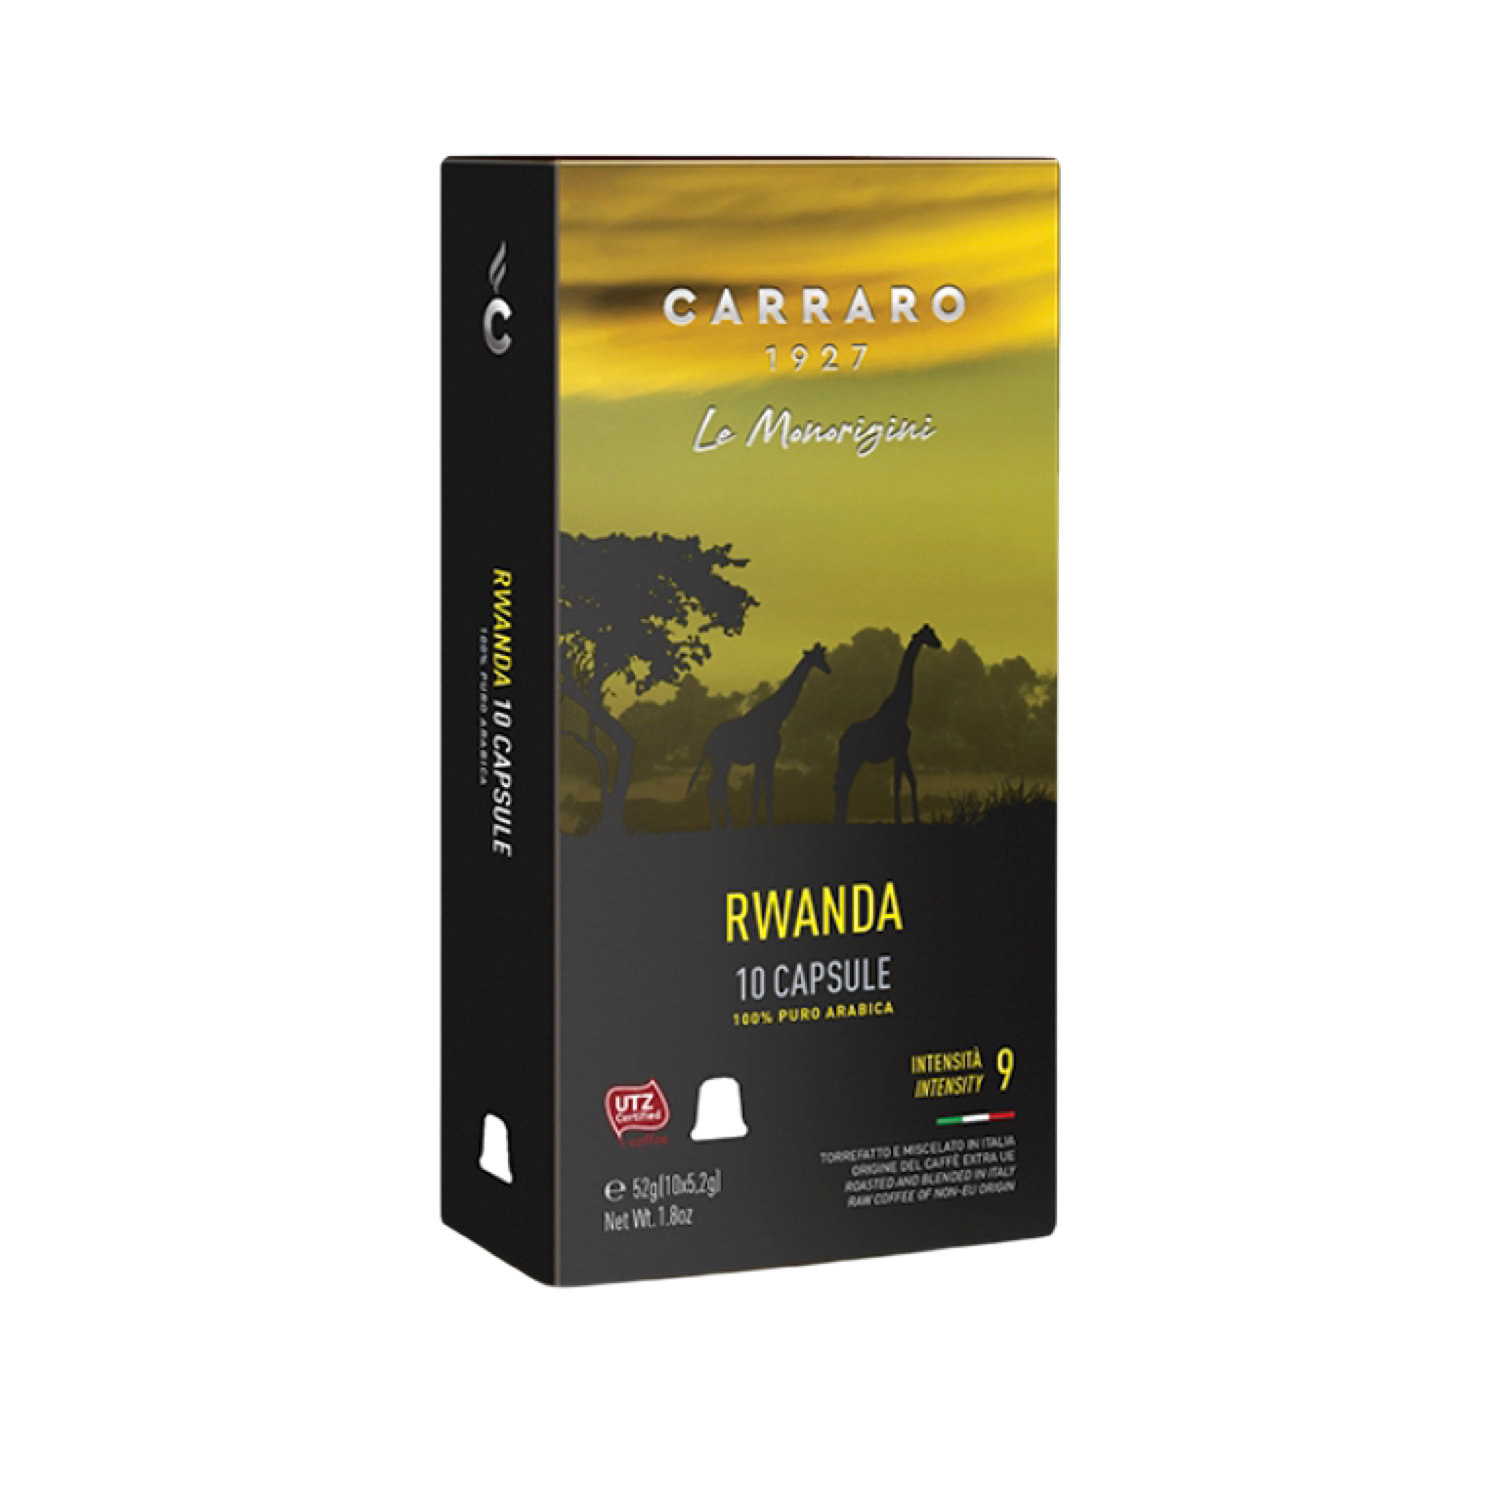 Carraro Nespresso Specialty Bourbon Arabica Rwanda x10 пар.